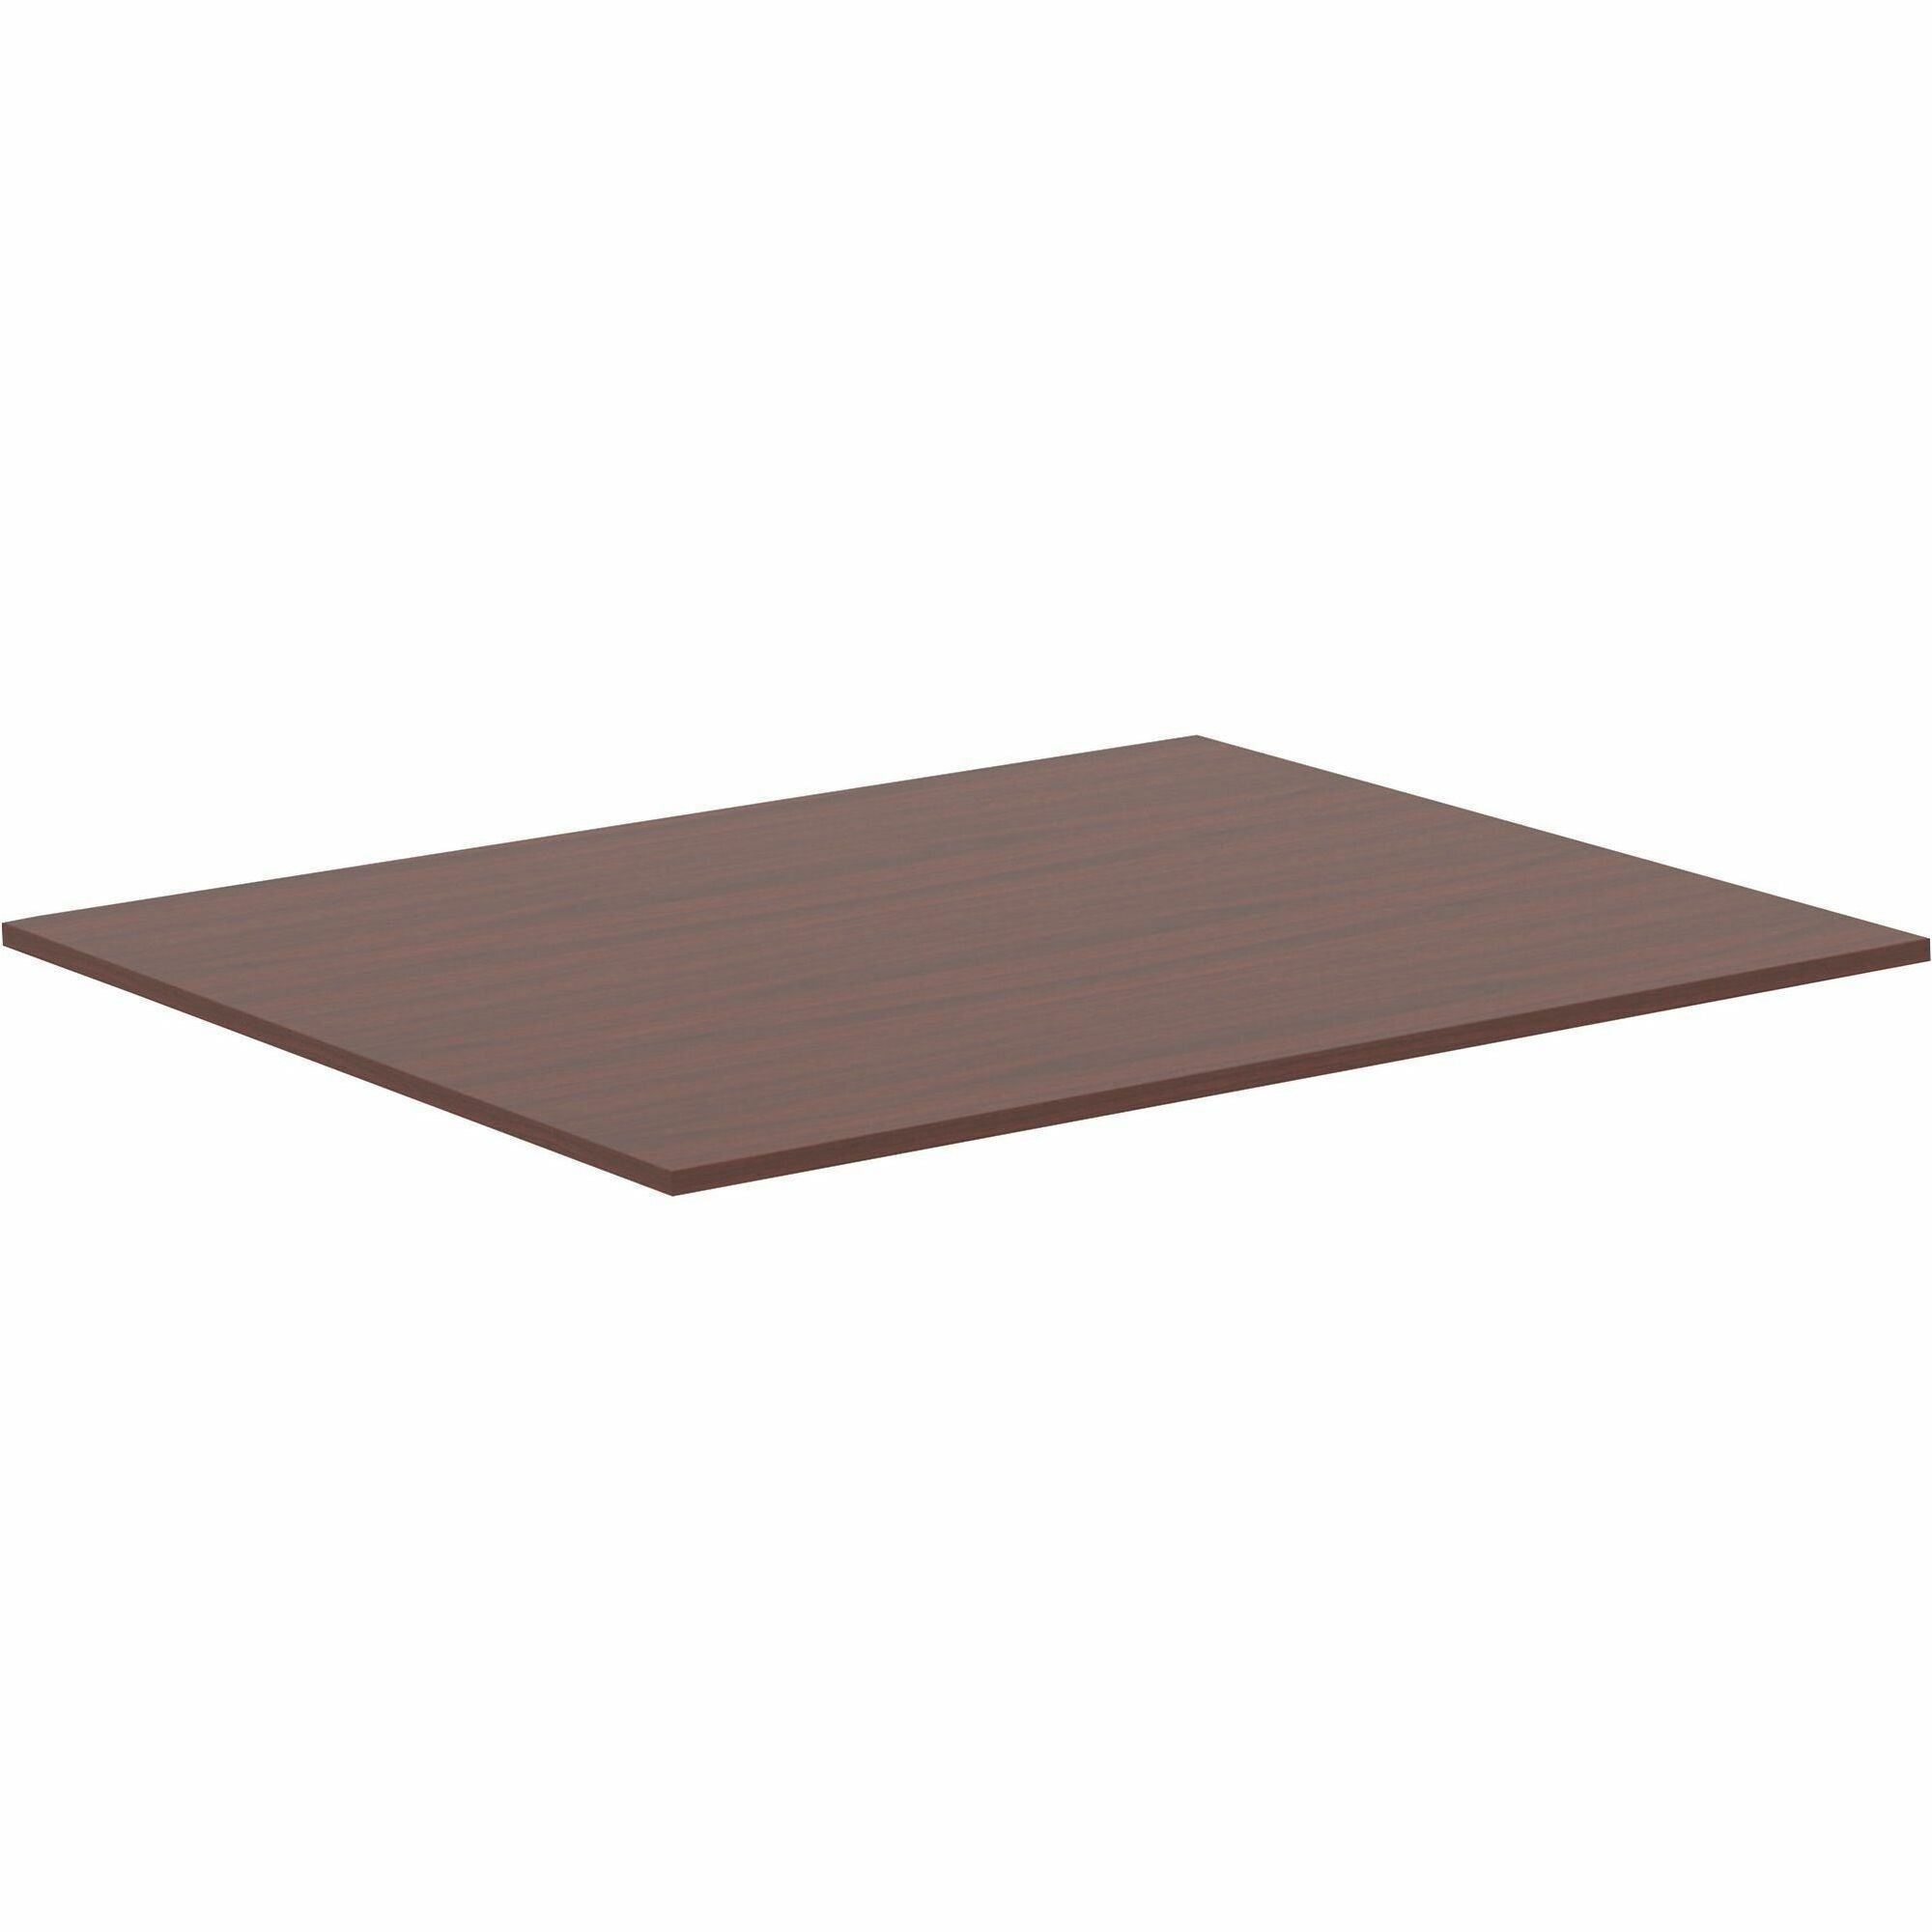 lorell-revelance-conference-rectangular-tabletop-599-x-473-x-1-x-1-material-laminate-finish-mahogany_llr16255 - 1